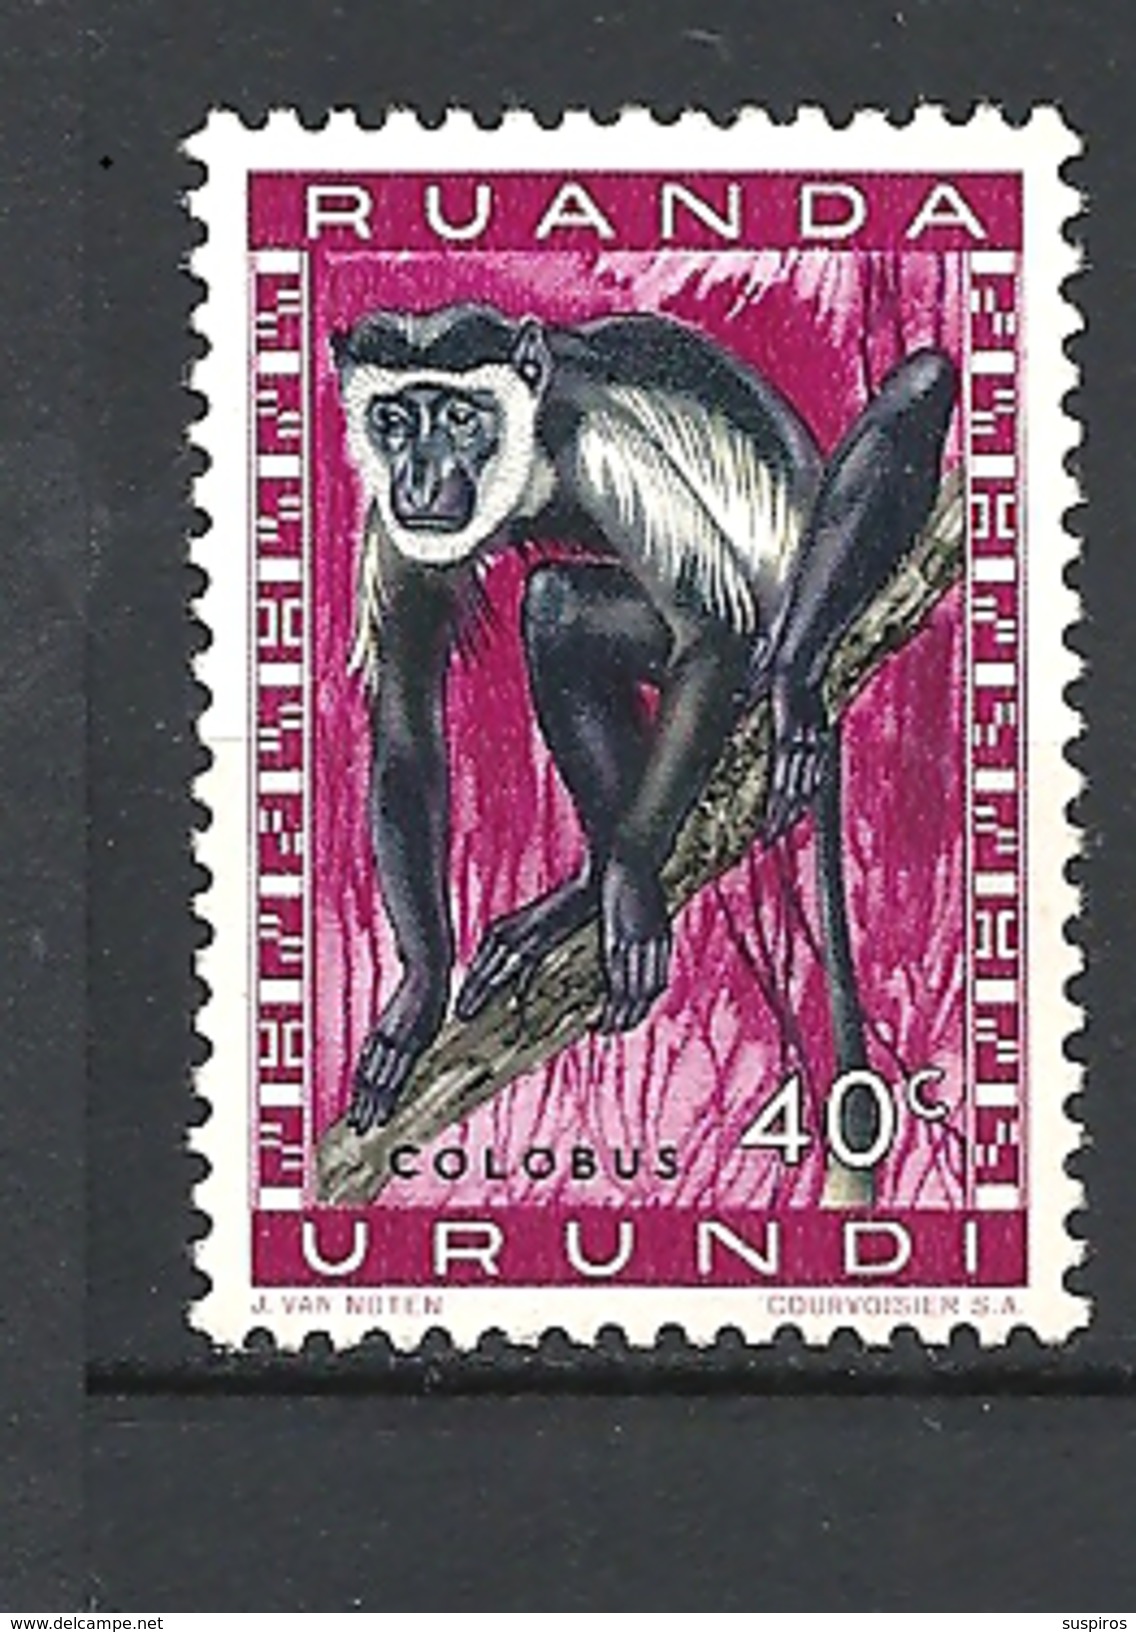 RUANDA URUNDI - 1959 Fauna Colobus Sp. MONKEYMNH - Used Stamps